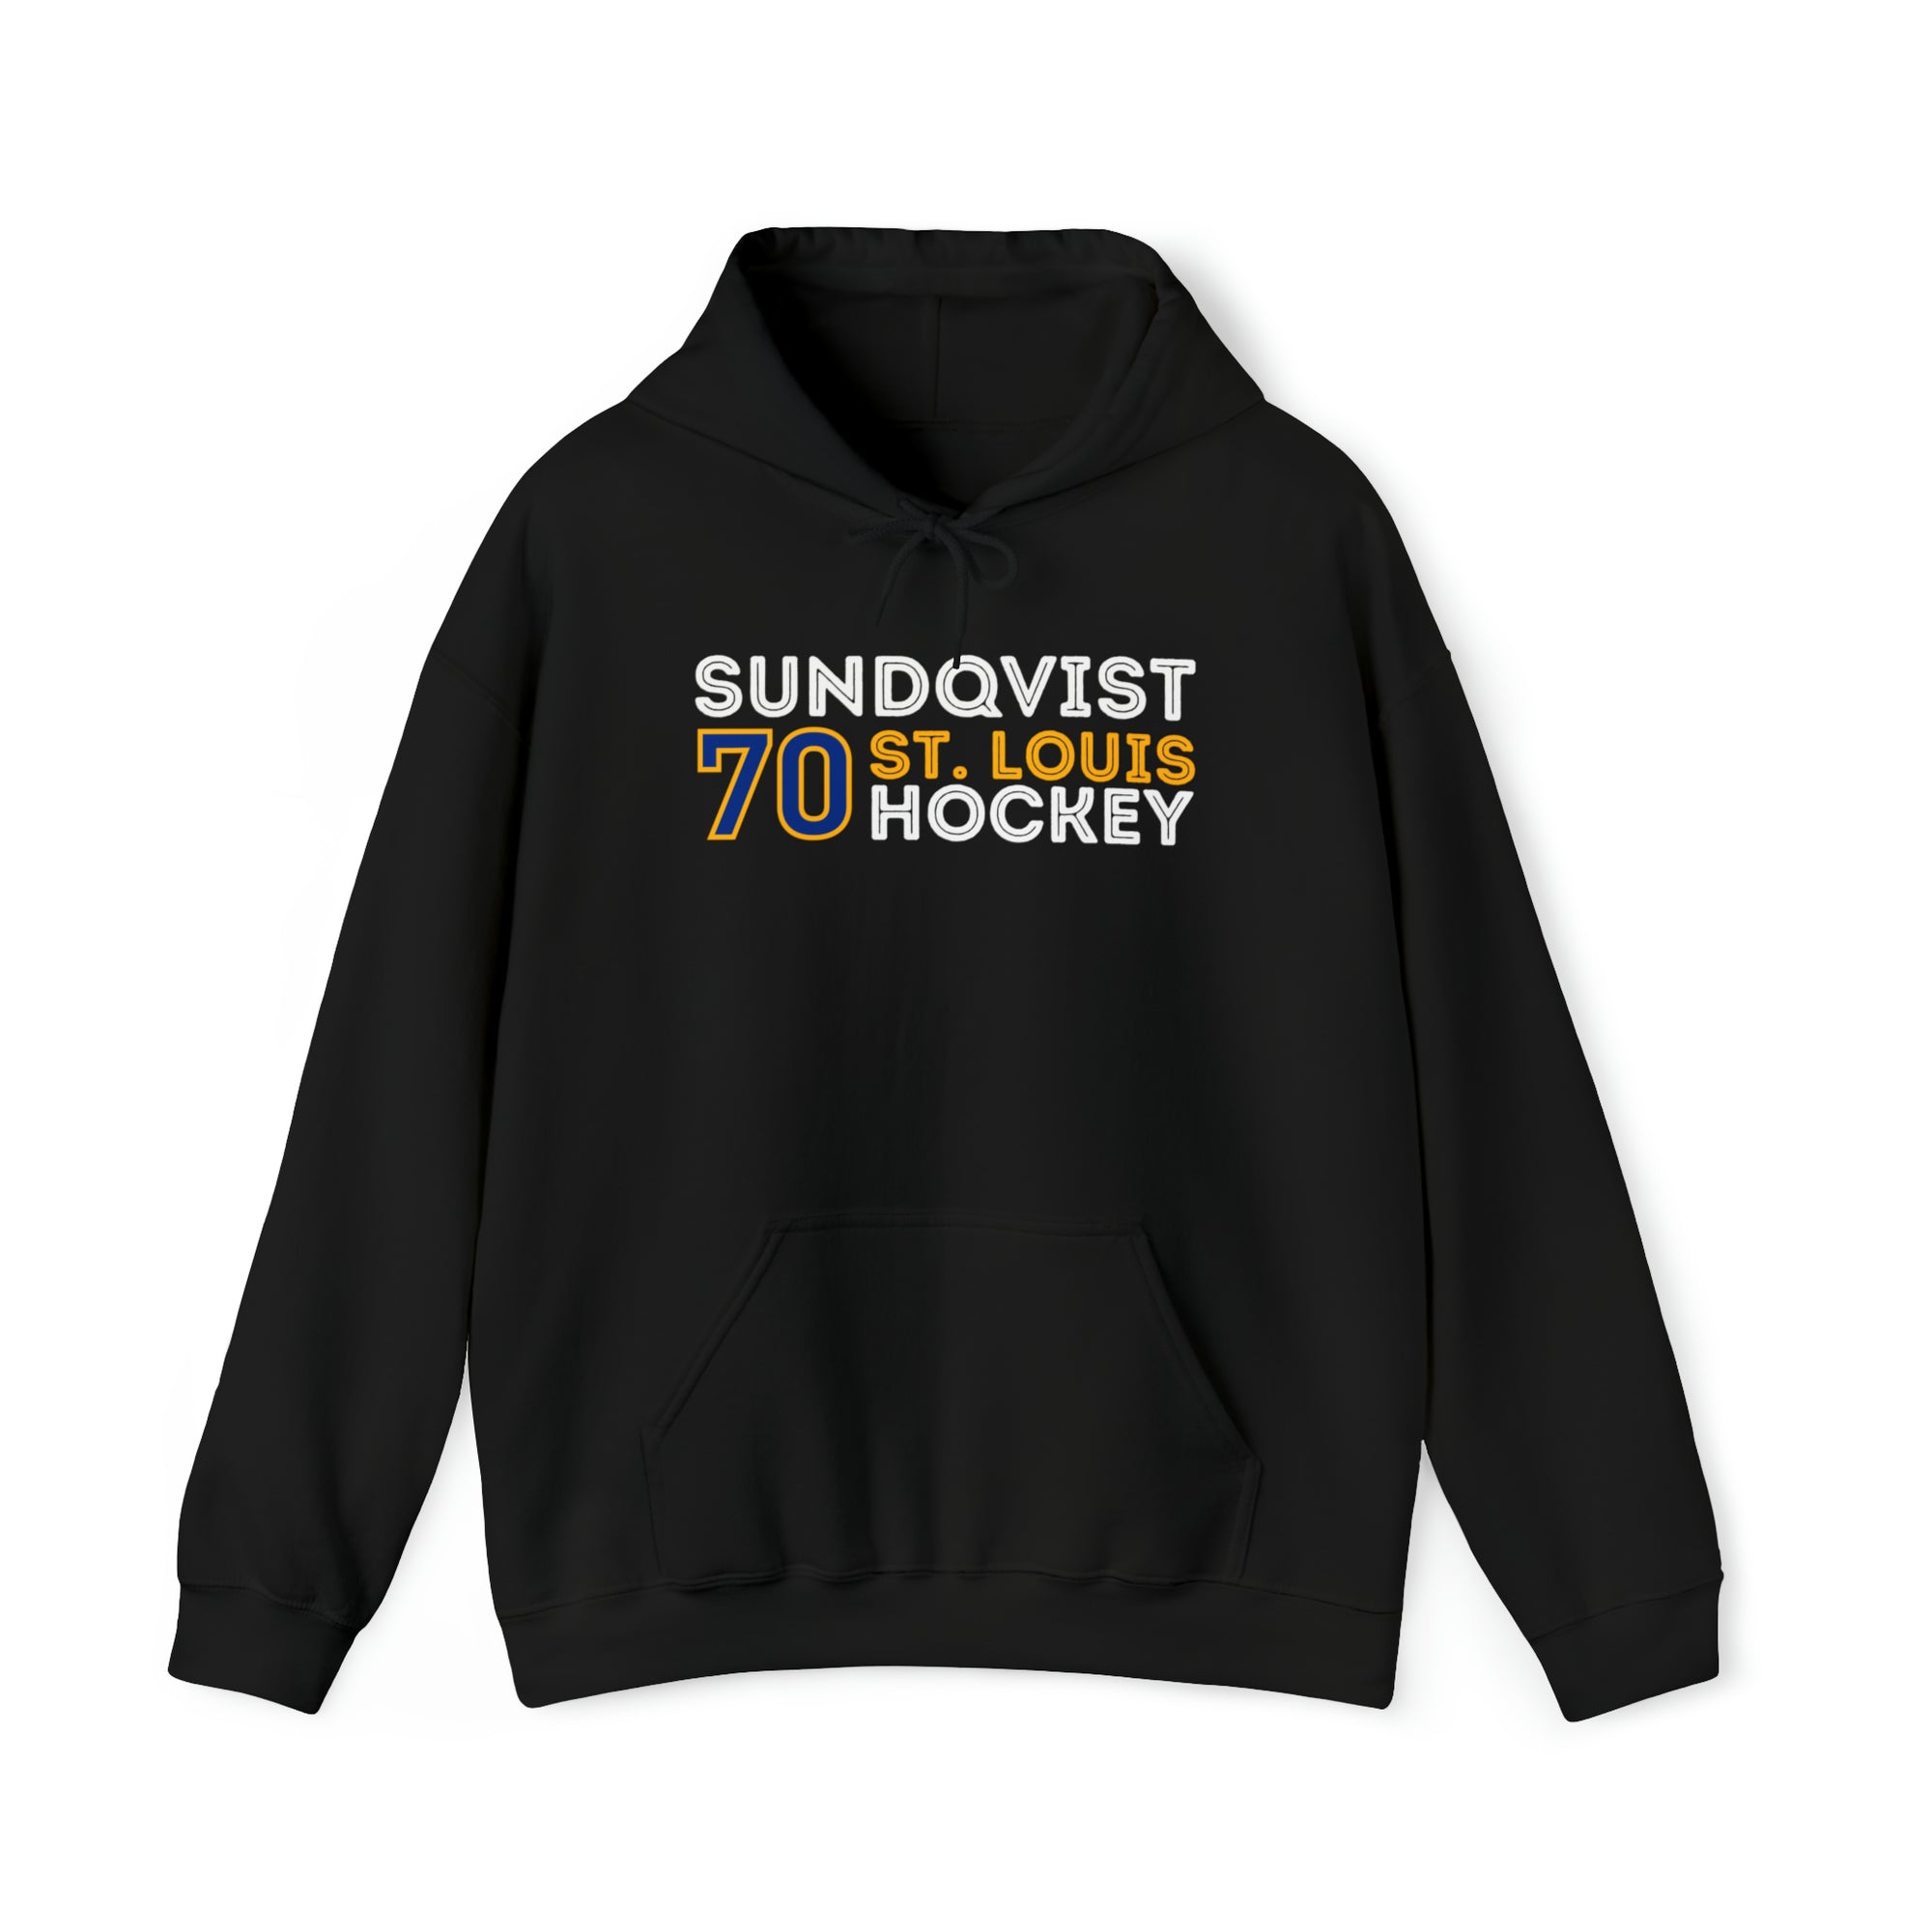 Sundqvist 70 St. Louis Hockey Grafitti Wall Design Unisex Hooded Sweatshirt